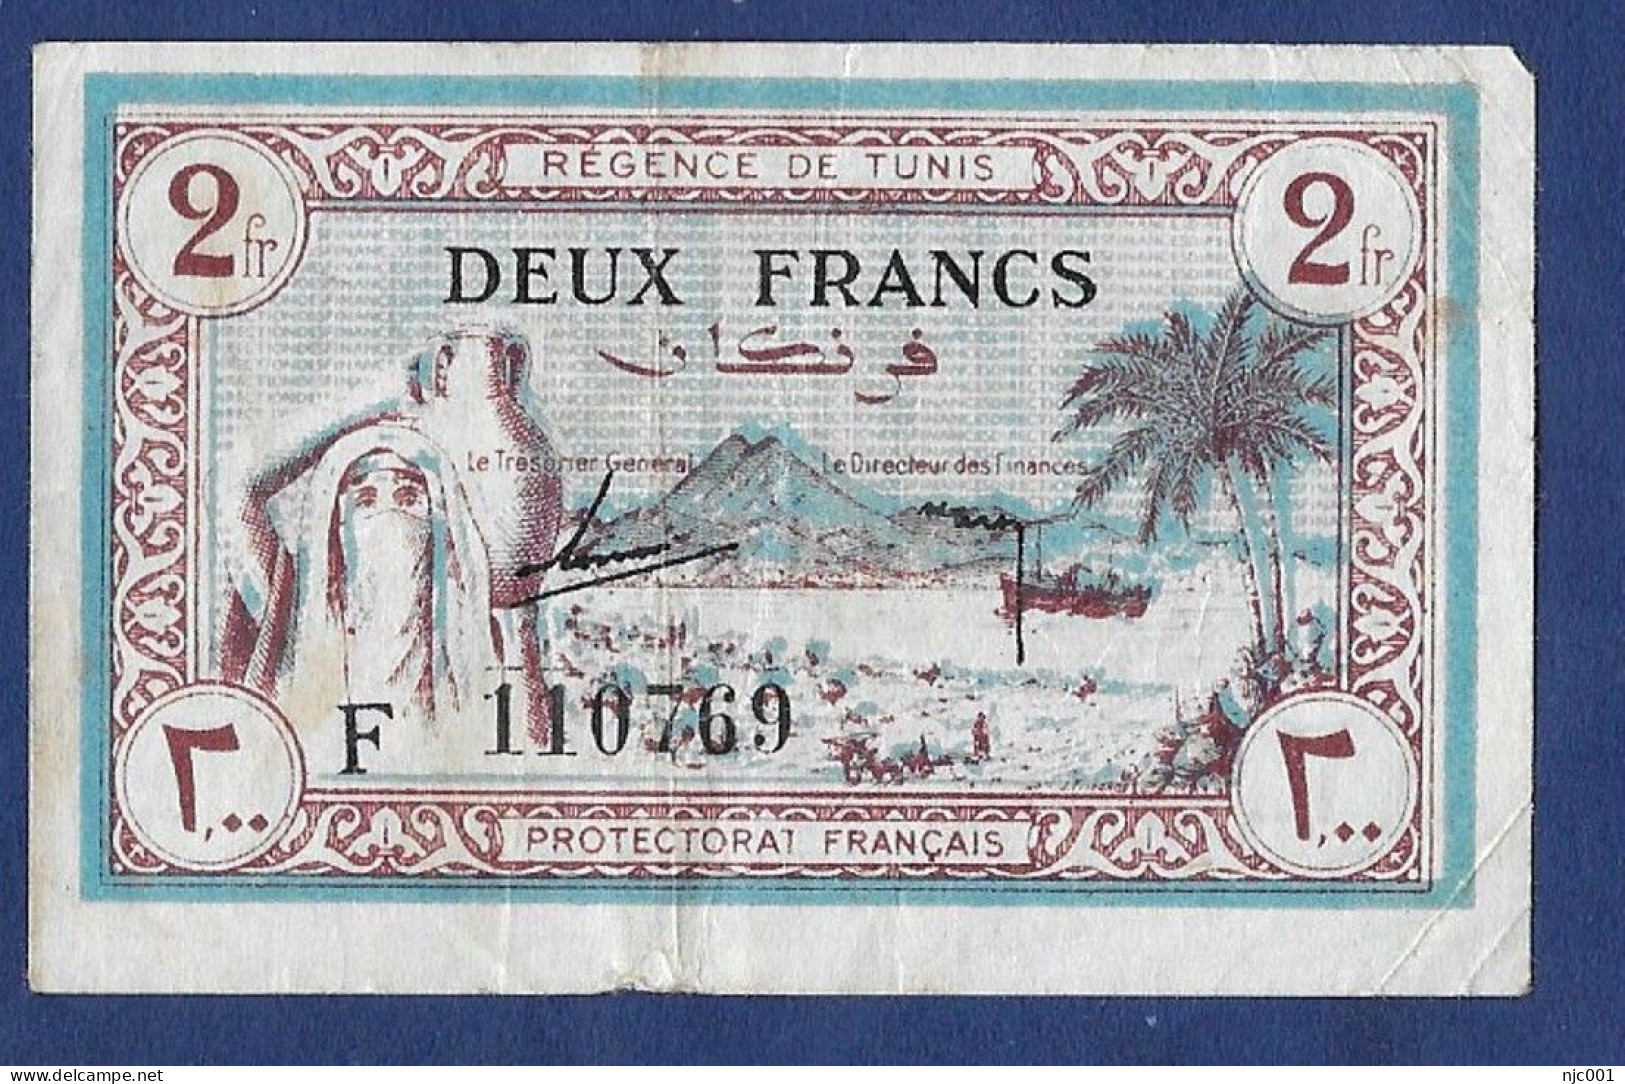 Tunisia 2 Francs Banknote 1943 - Tunisia